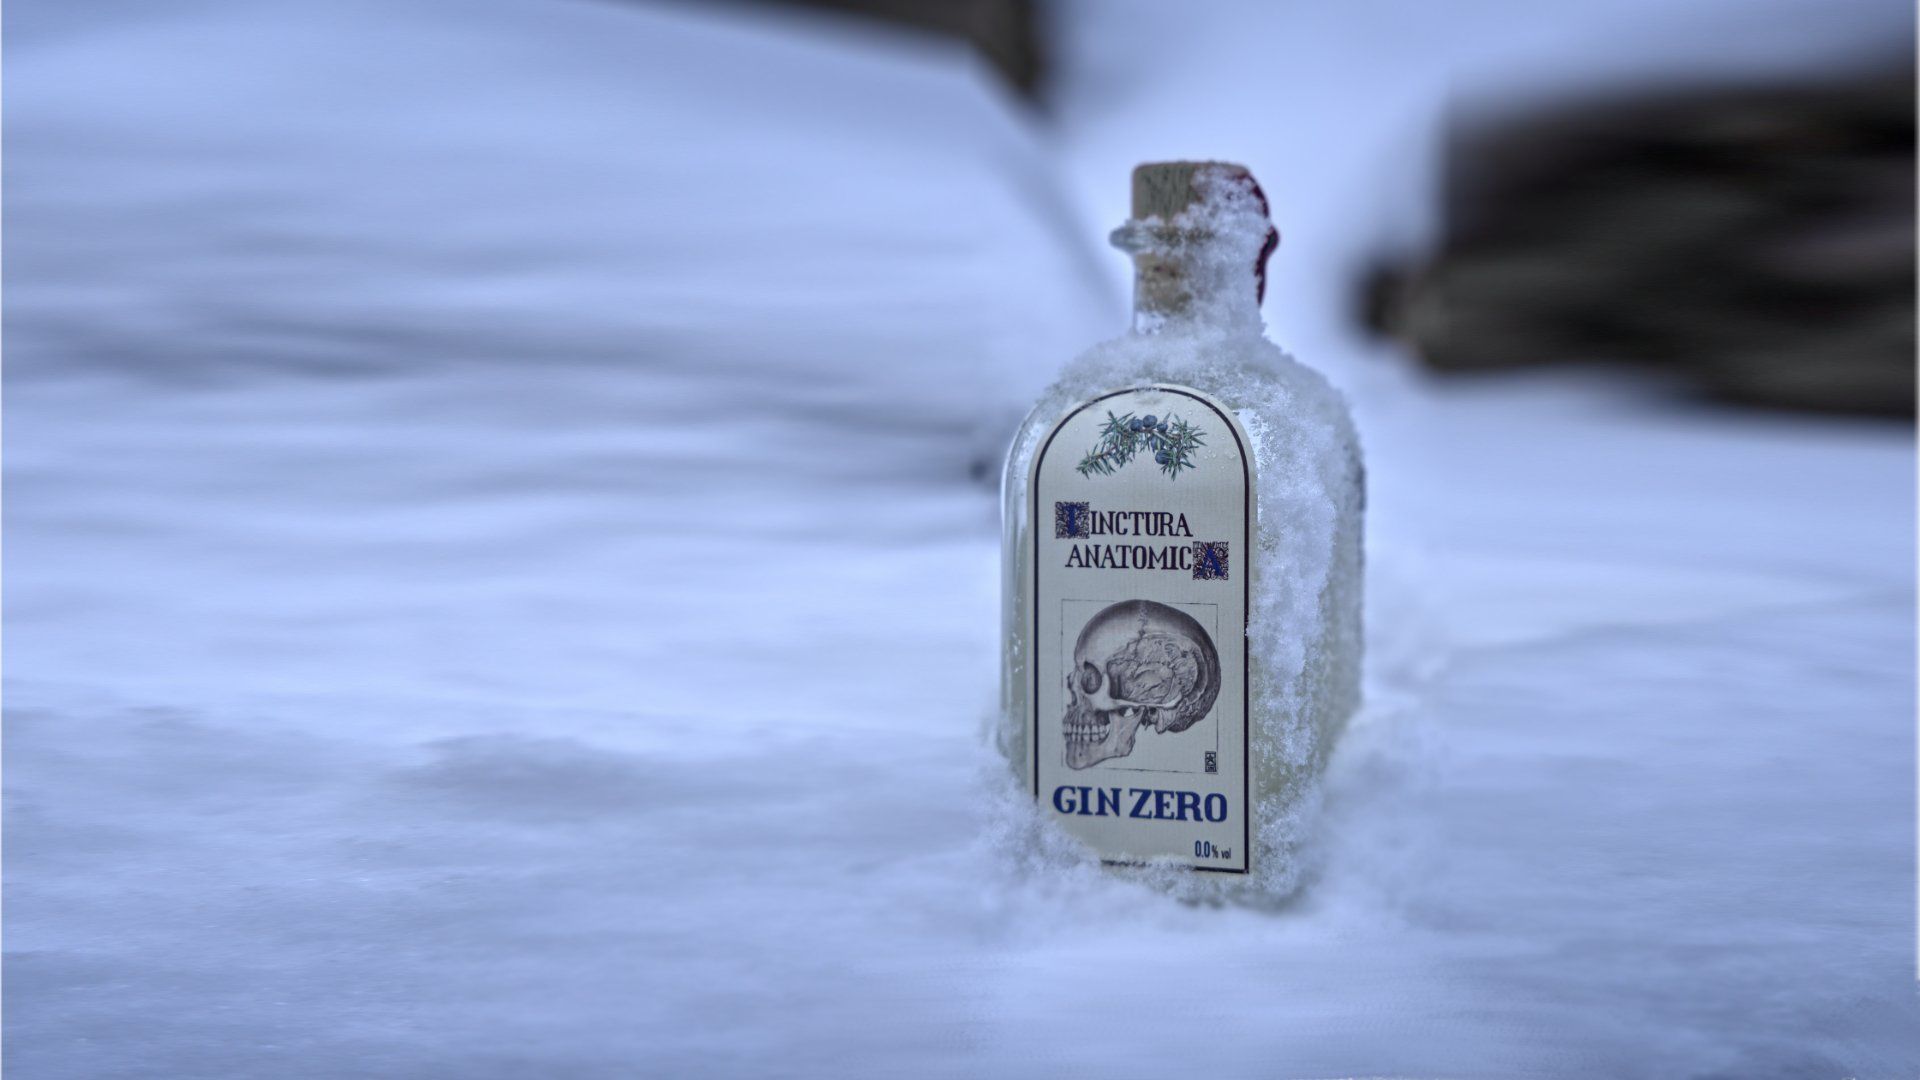 Tinctura Anatomica - Gin Zero - Handcrafted Gin - Gin ohne Alkohol - alkoholfreier Gin - 0.0%